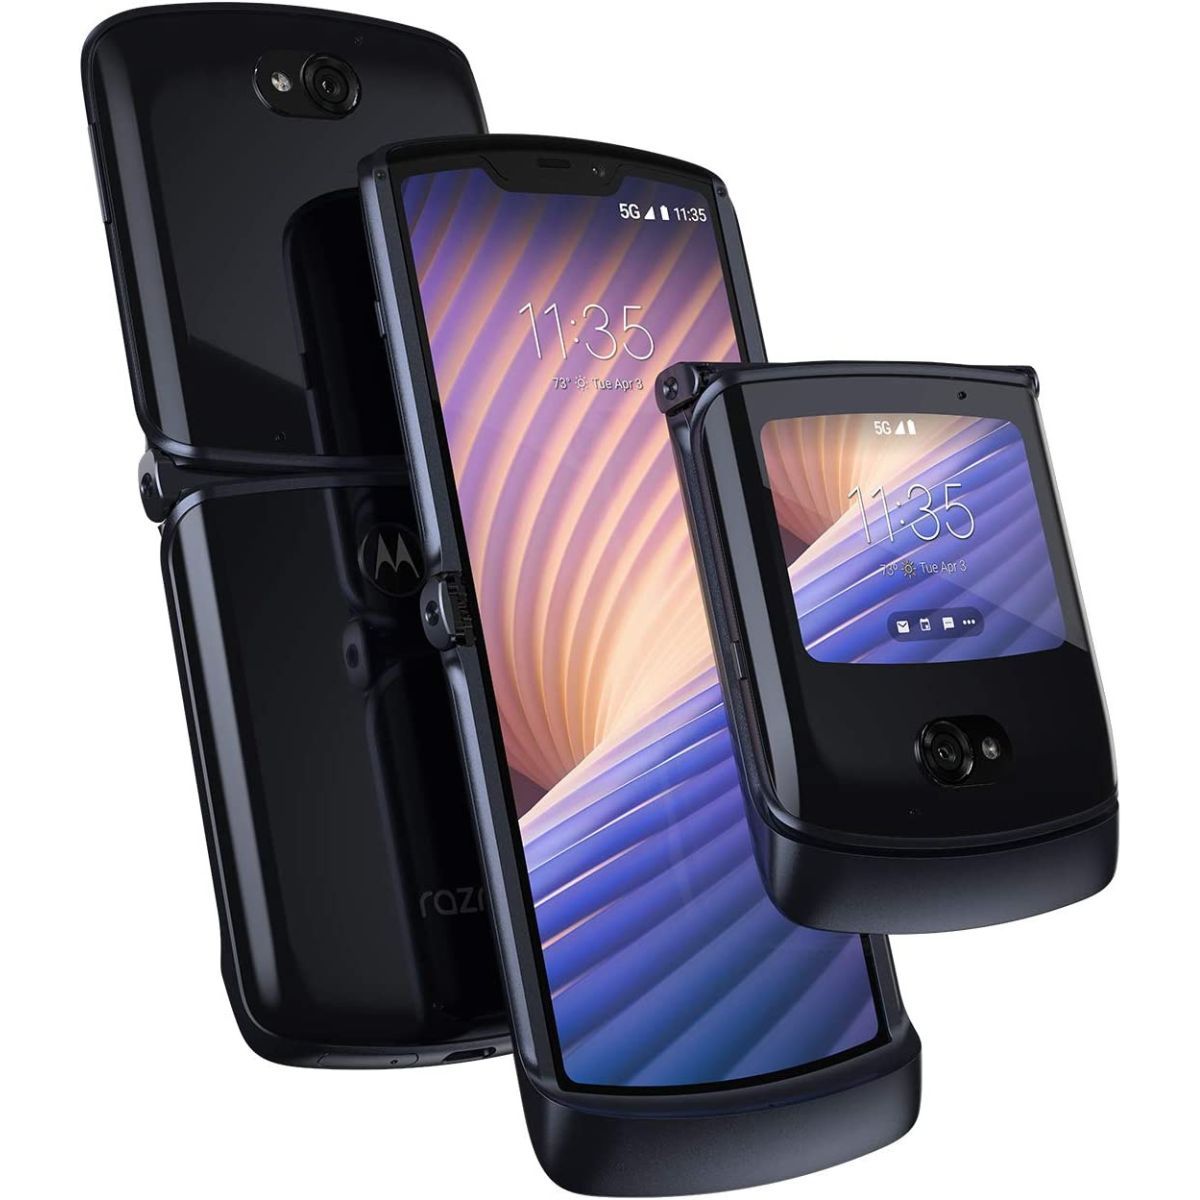 Motorola Razr classic flip phone returns: This time it's a pricey foldable